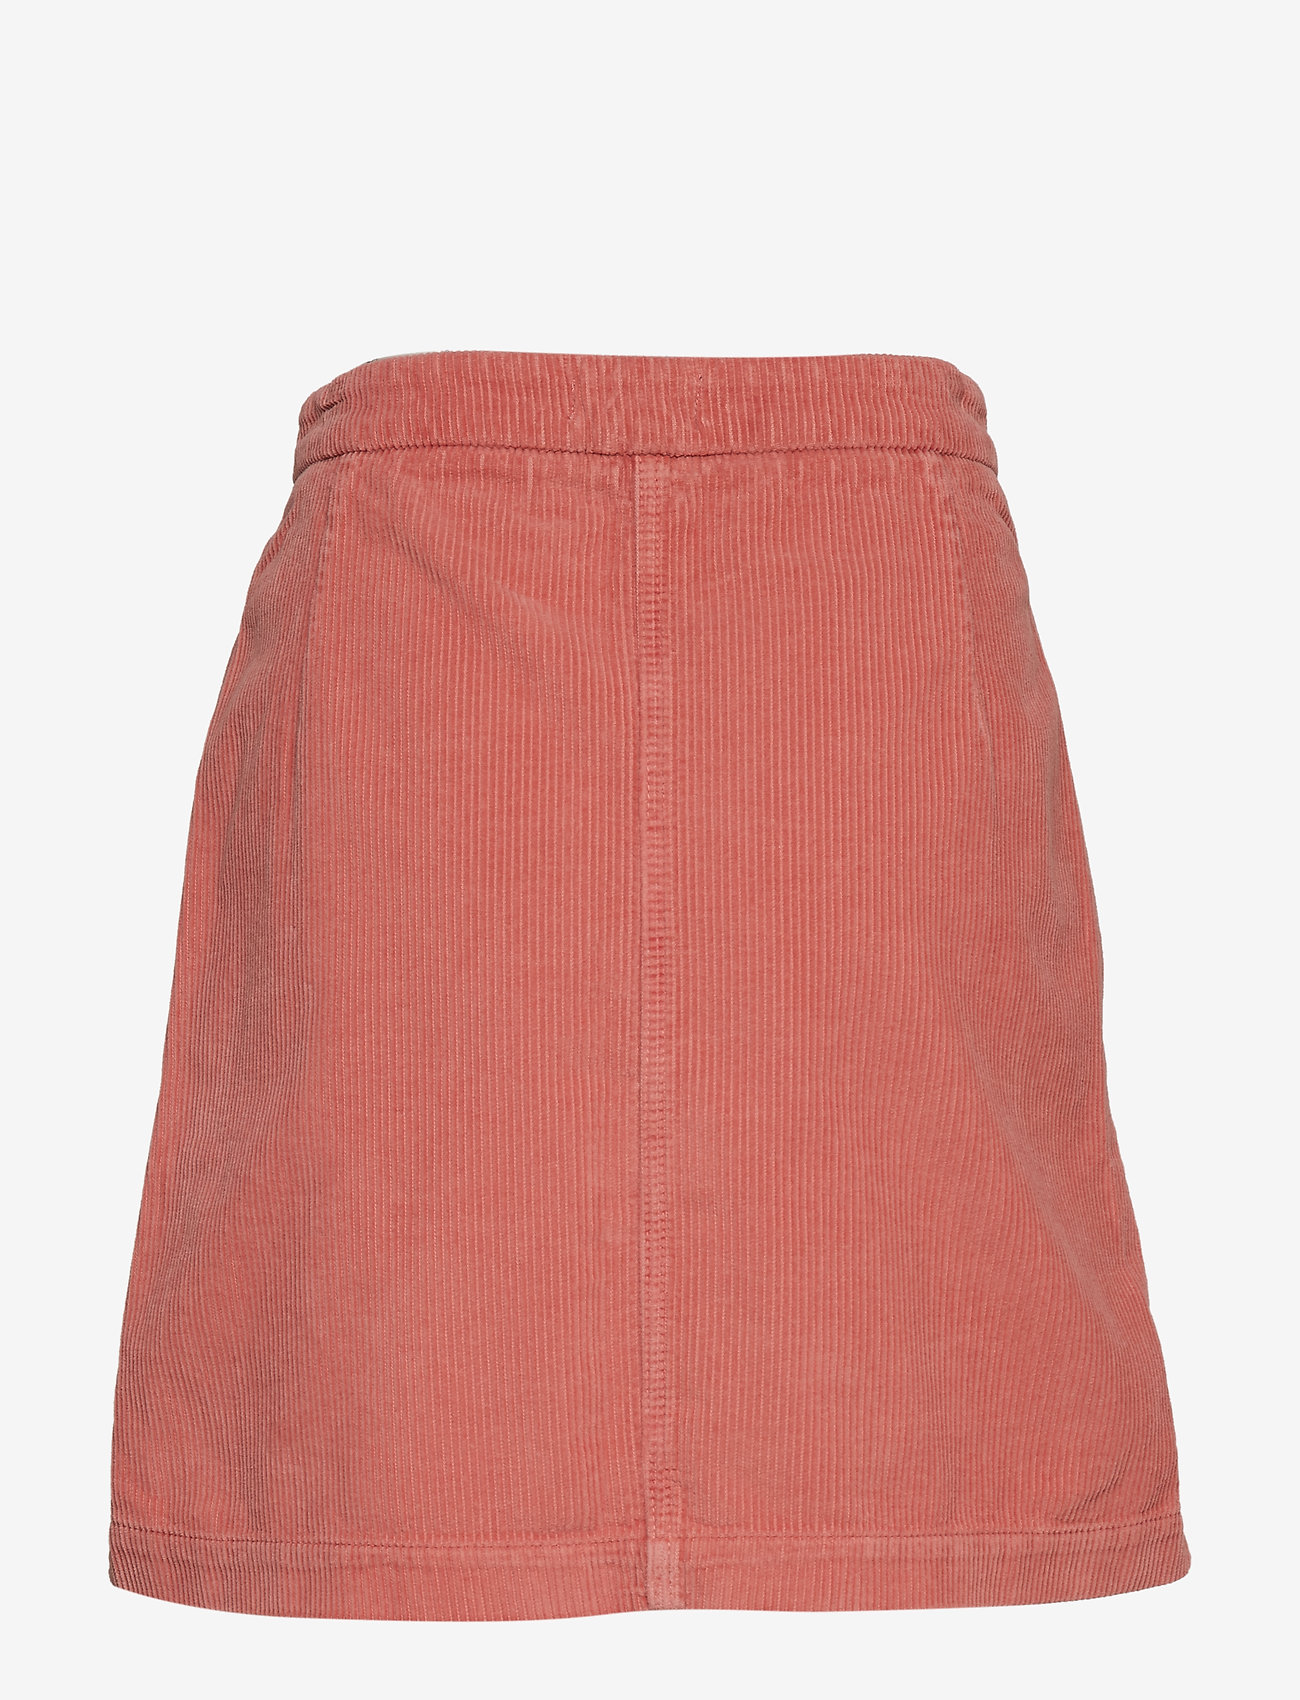 Morris Lady - Alba Skirt - short skirts - pink - 1